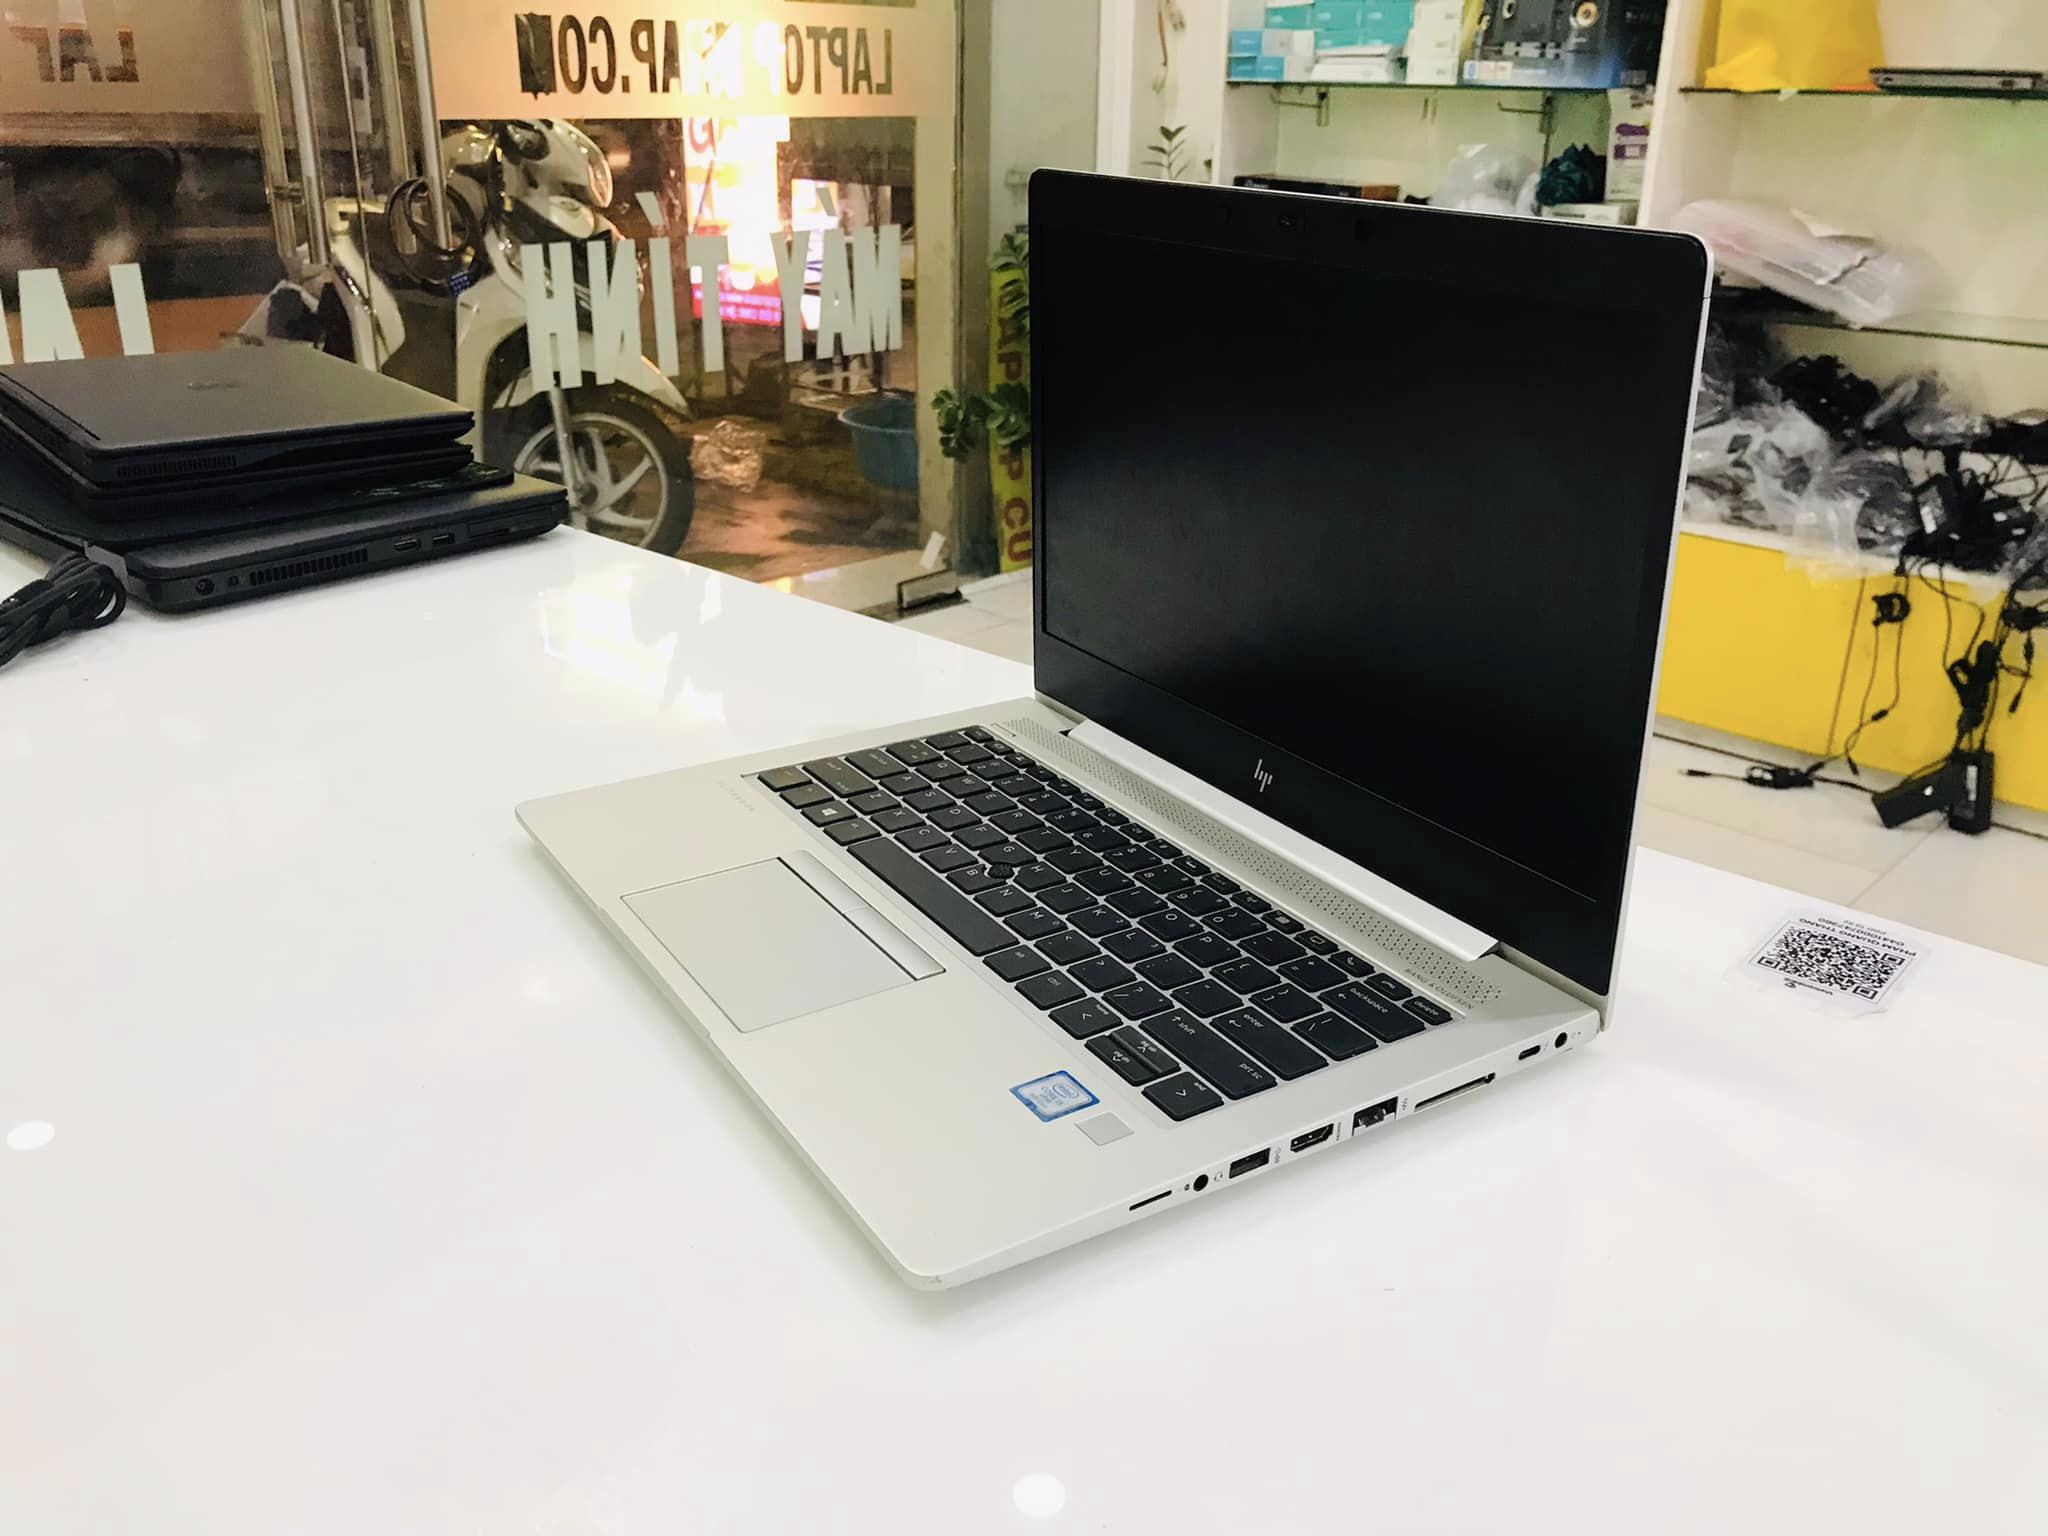 hp-830g5-i5-laptopnhap